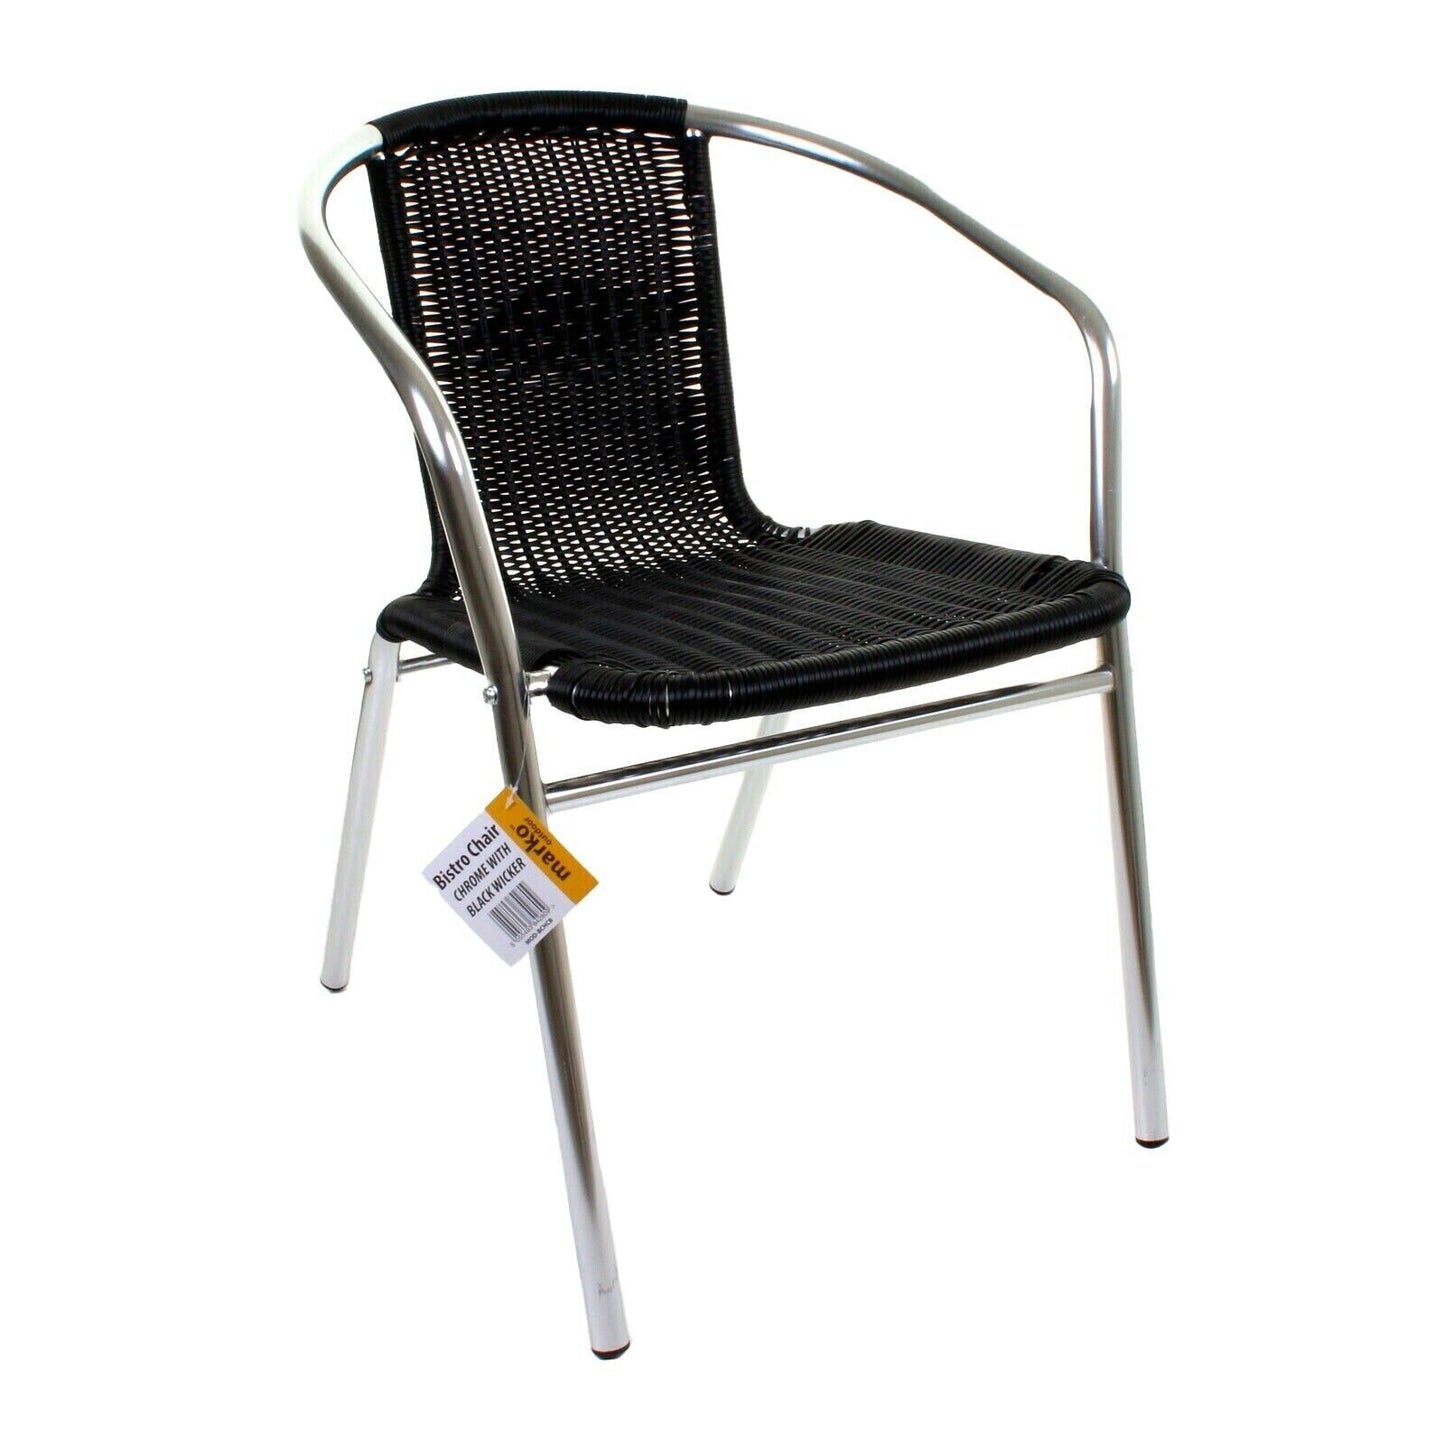 5PC Chrome Black Wicker Chair with Aluminium Chrome 60cm Round Table